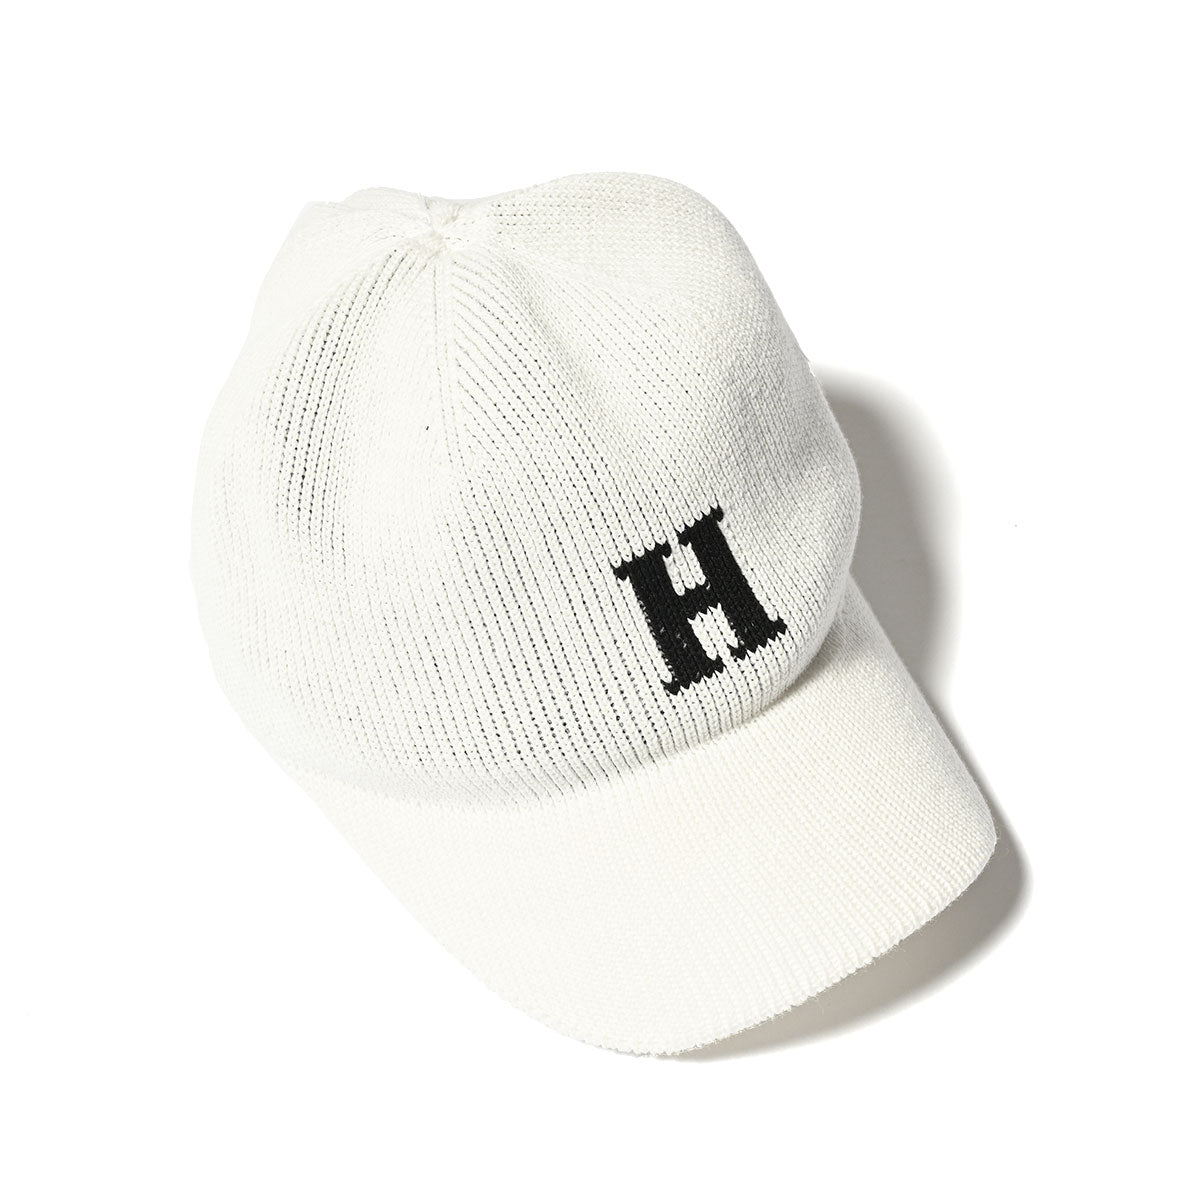 HOMEGAME - H LOGO COTTON KNIT BASEBALL CAP WHITE【HG241414】